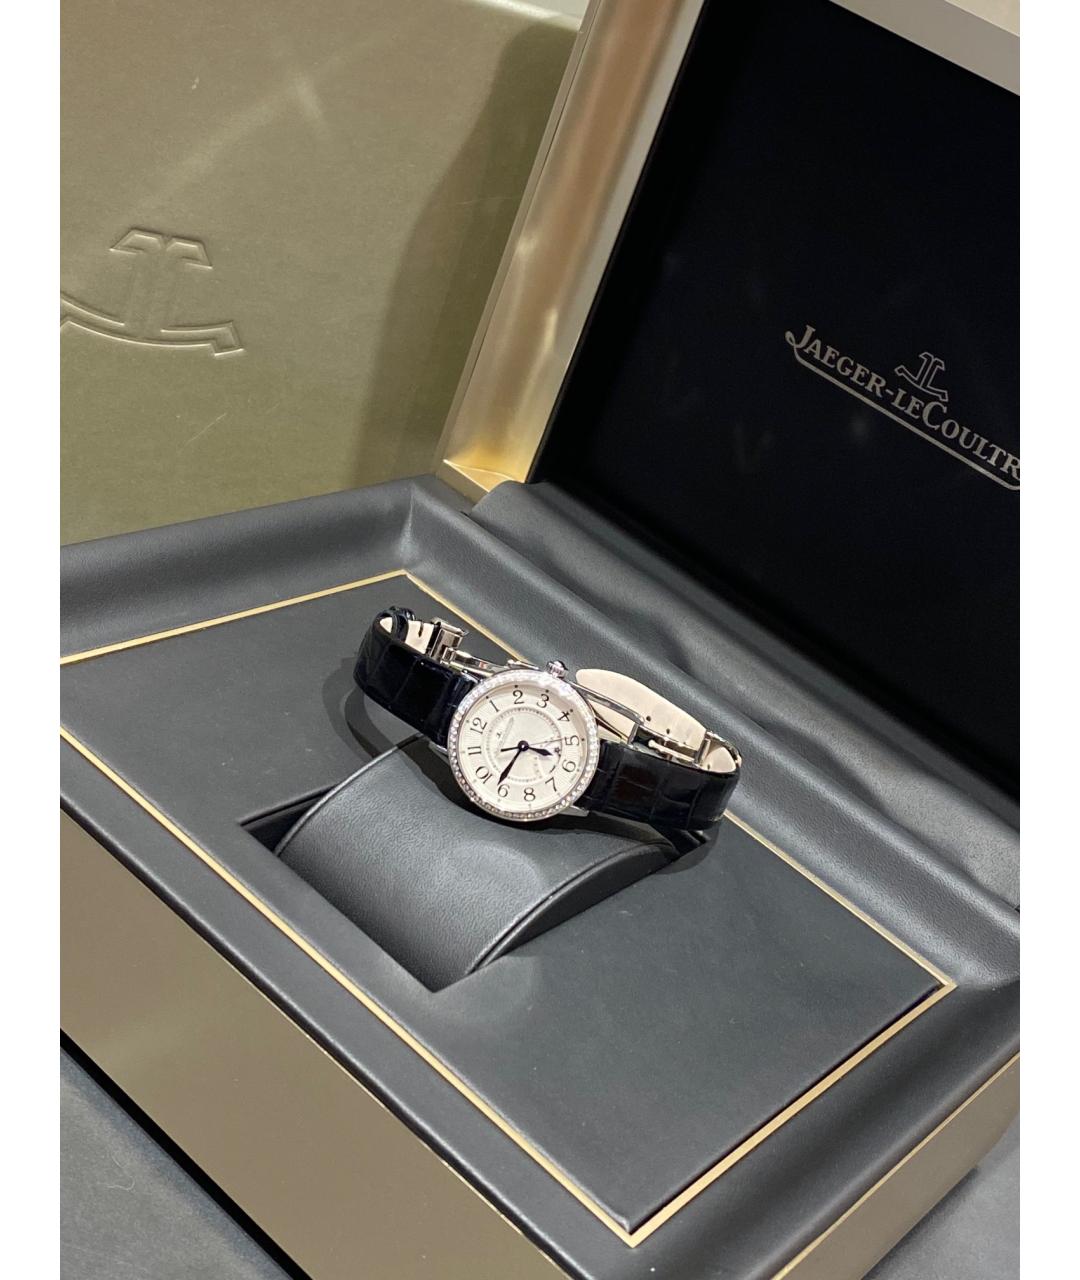 Jaeger LeCoultre Белые металлические часы, фото 2